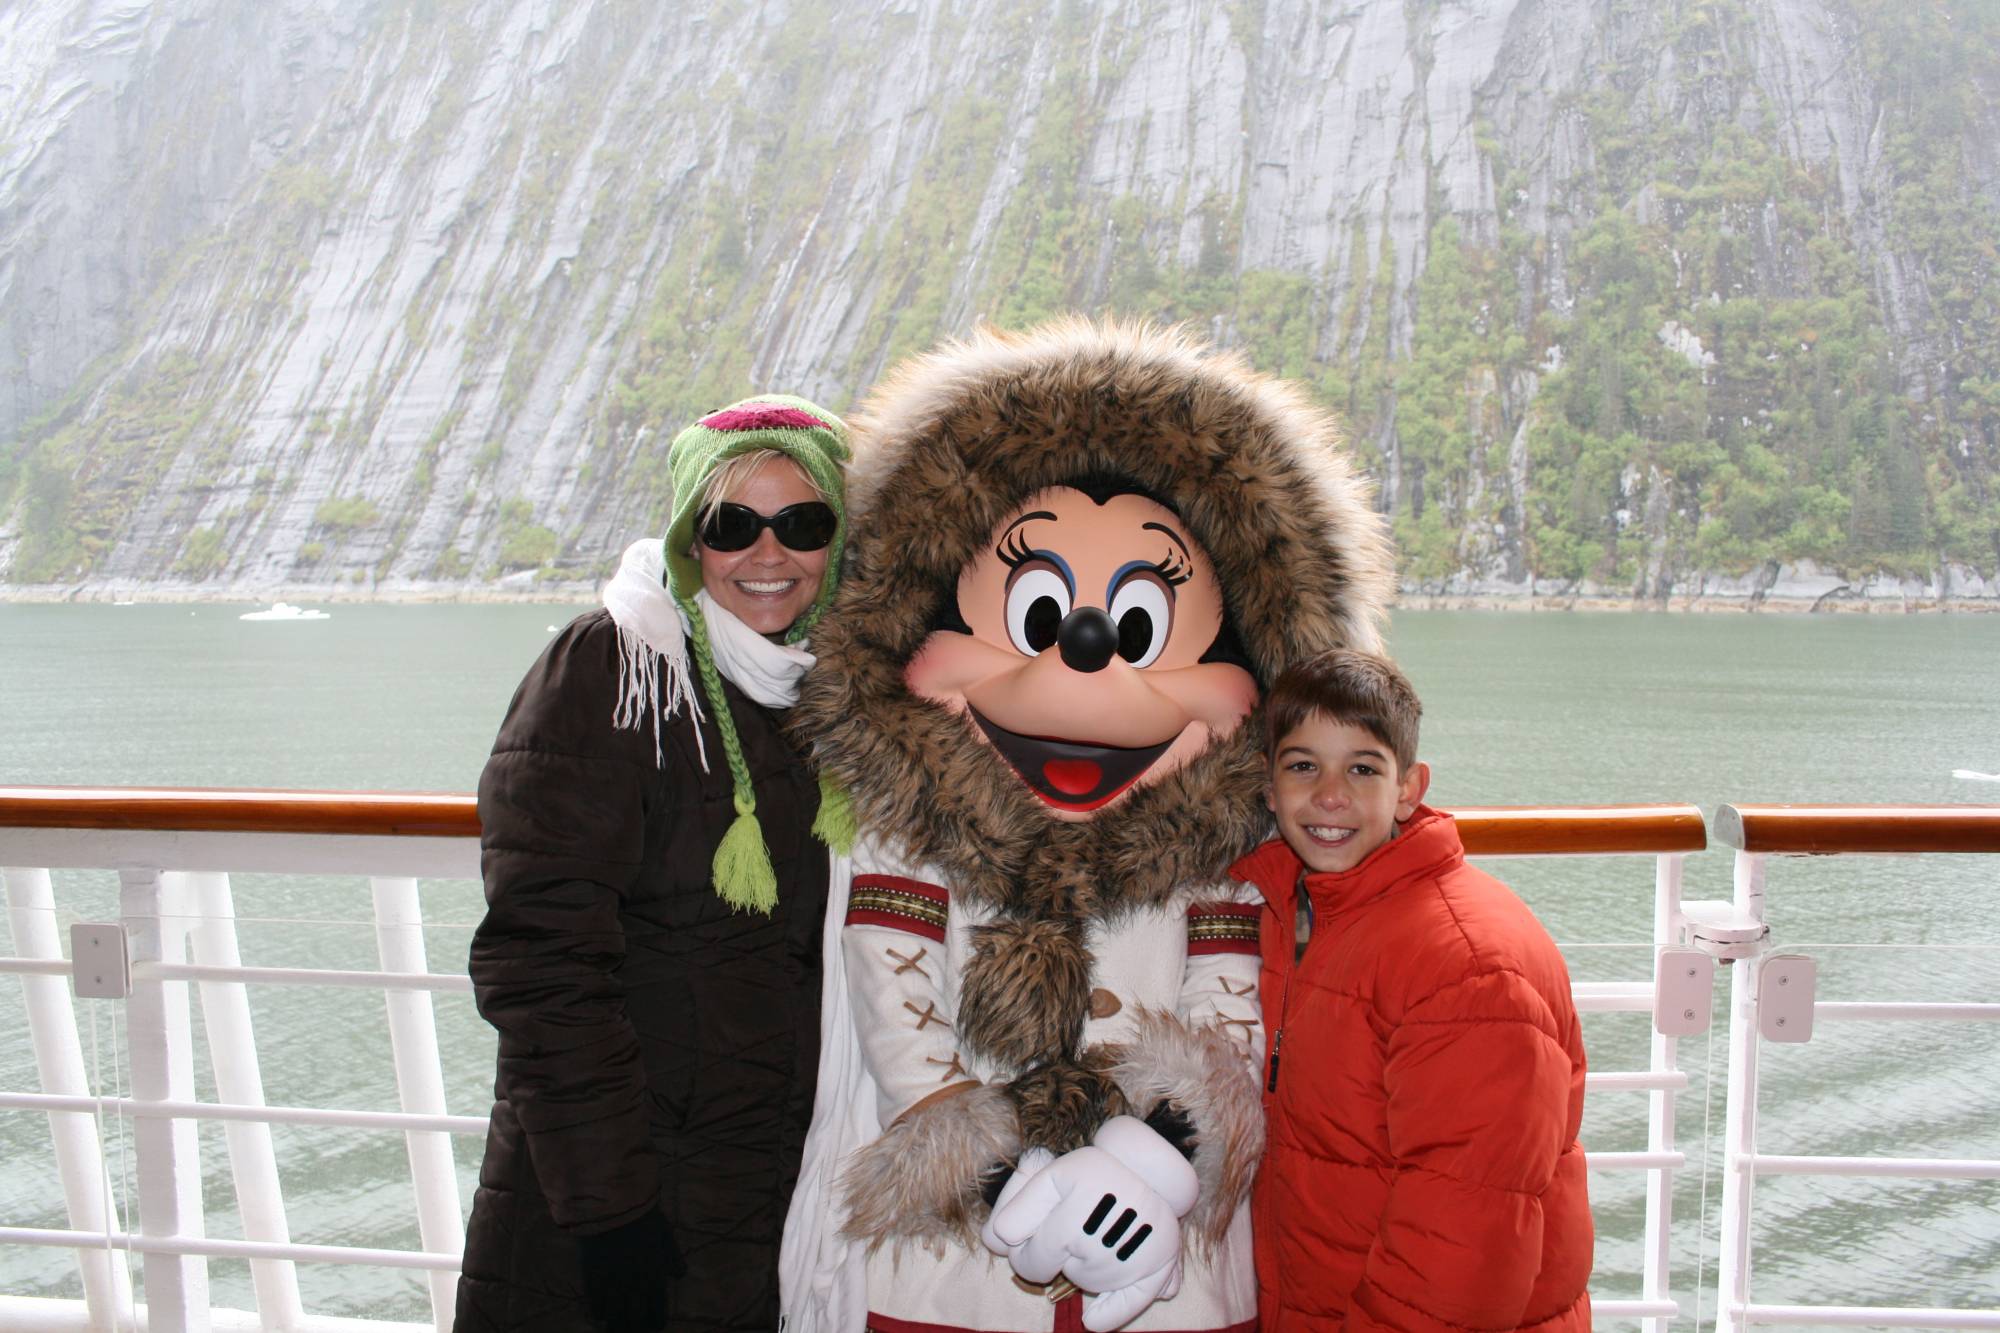 Enjoy an unusual day at sea onboard Disney Cruise Line when you cruise through Tracy Arm, Alaska | PassPorter.com